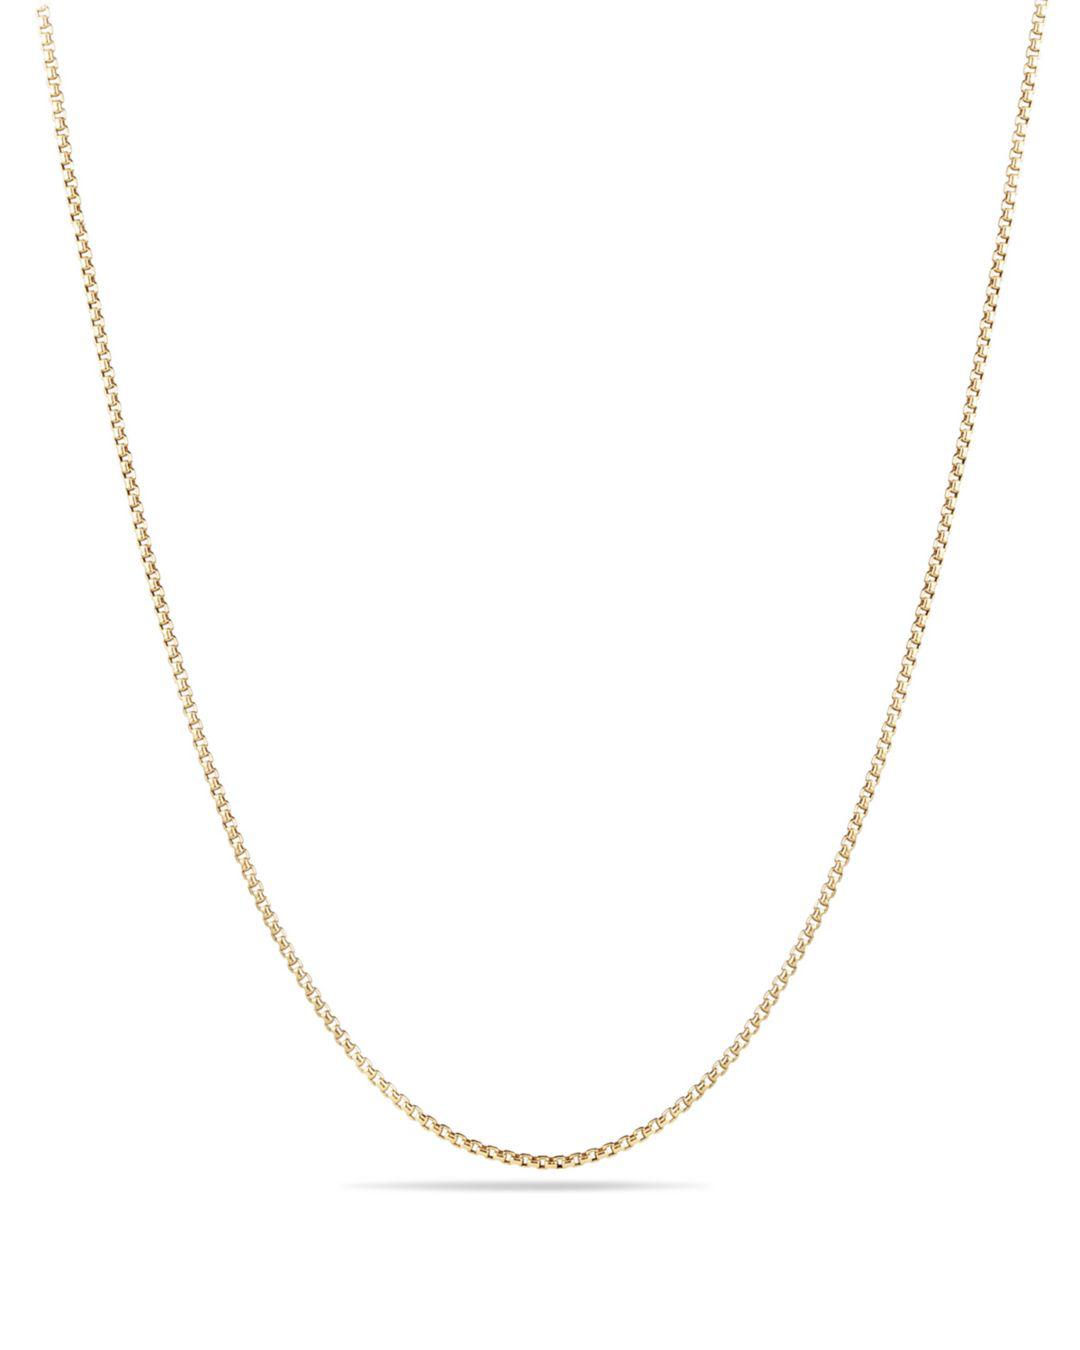 David Yurman 18k Gold Box Chain Necklace in Metallic - Lyst